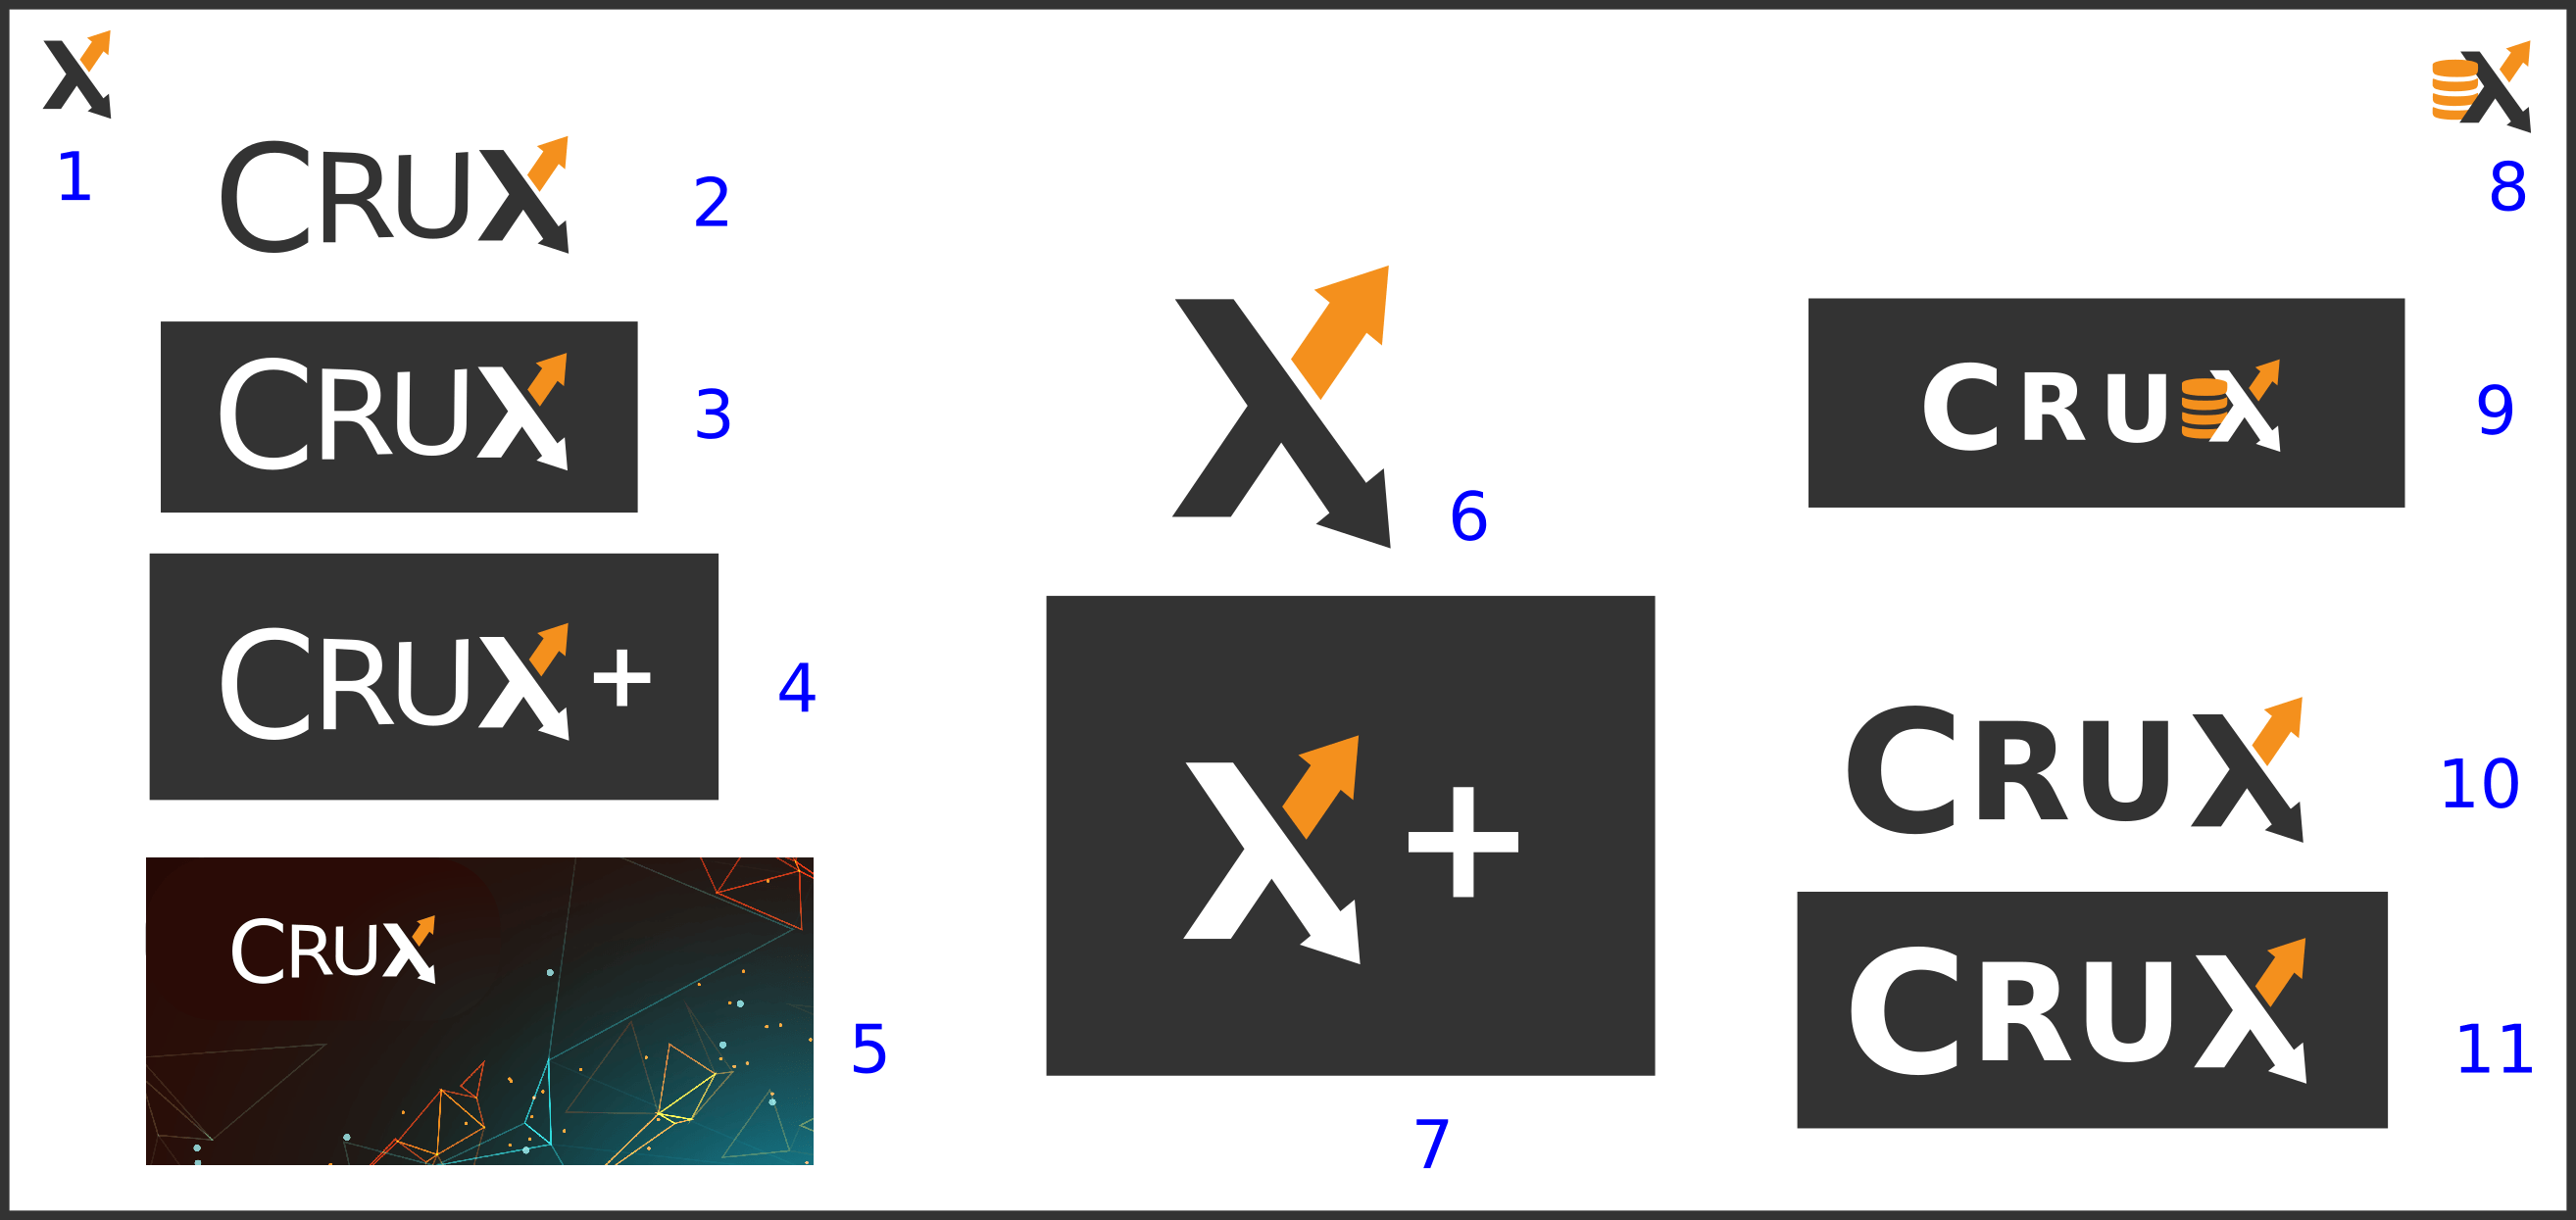 Crux Logo - Finalise Crux Logo · Issue #114 · juxt/crux · GitHub